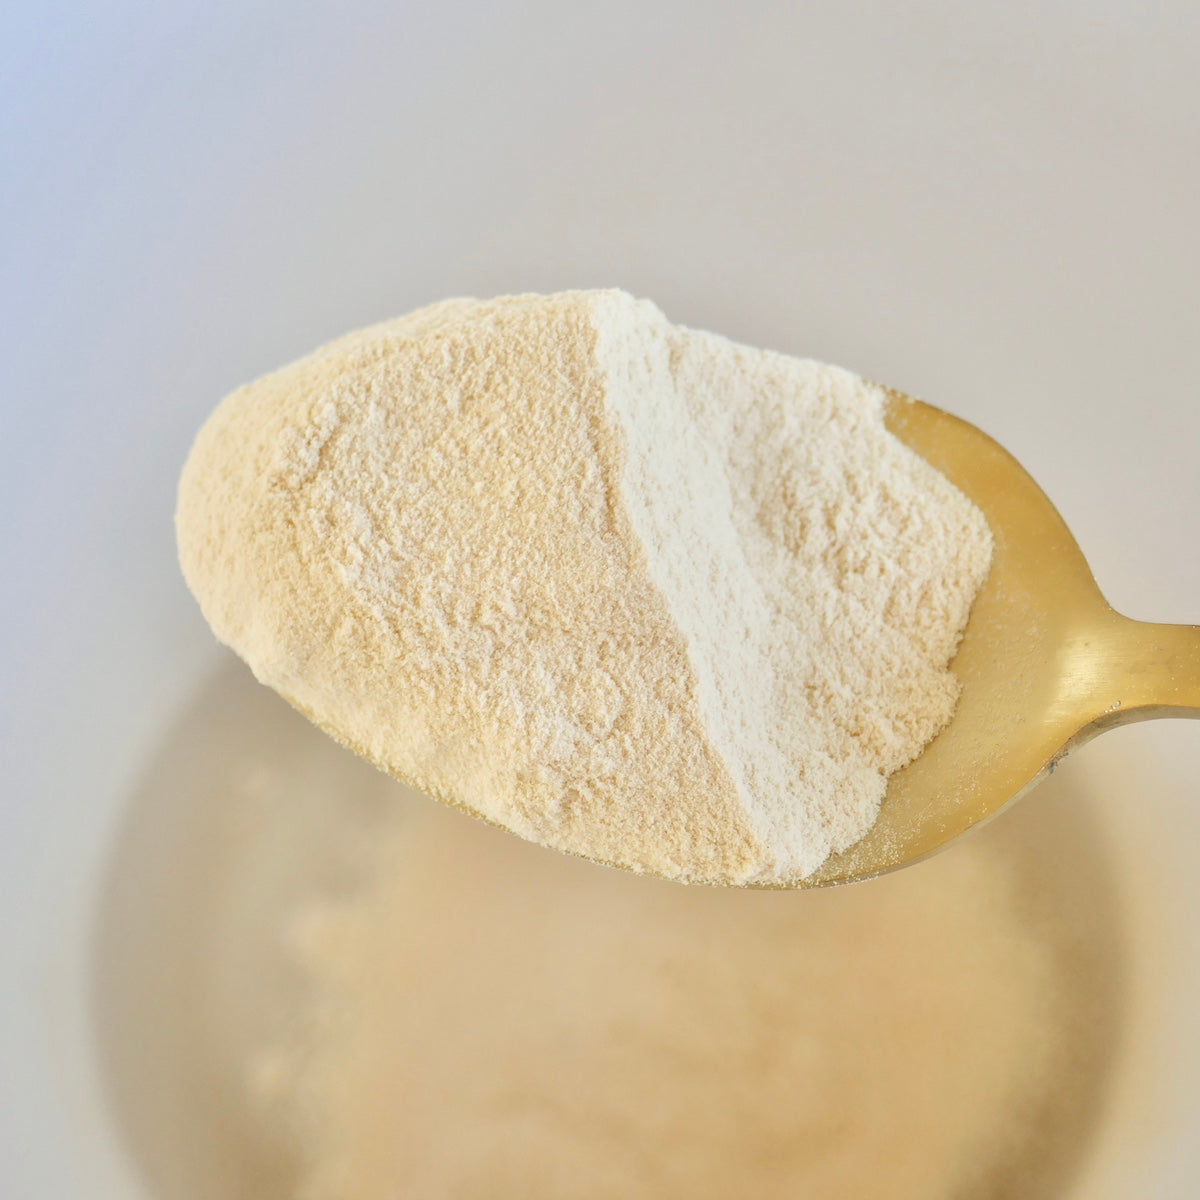 Scoop Of Raw Baobab Powder On Golden Spoon